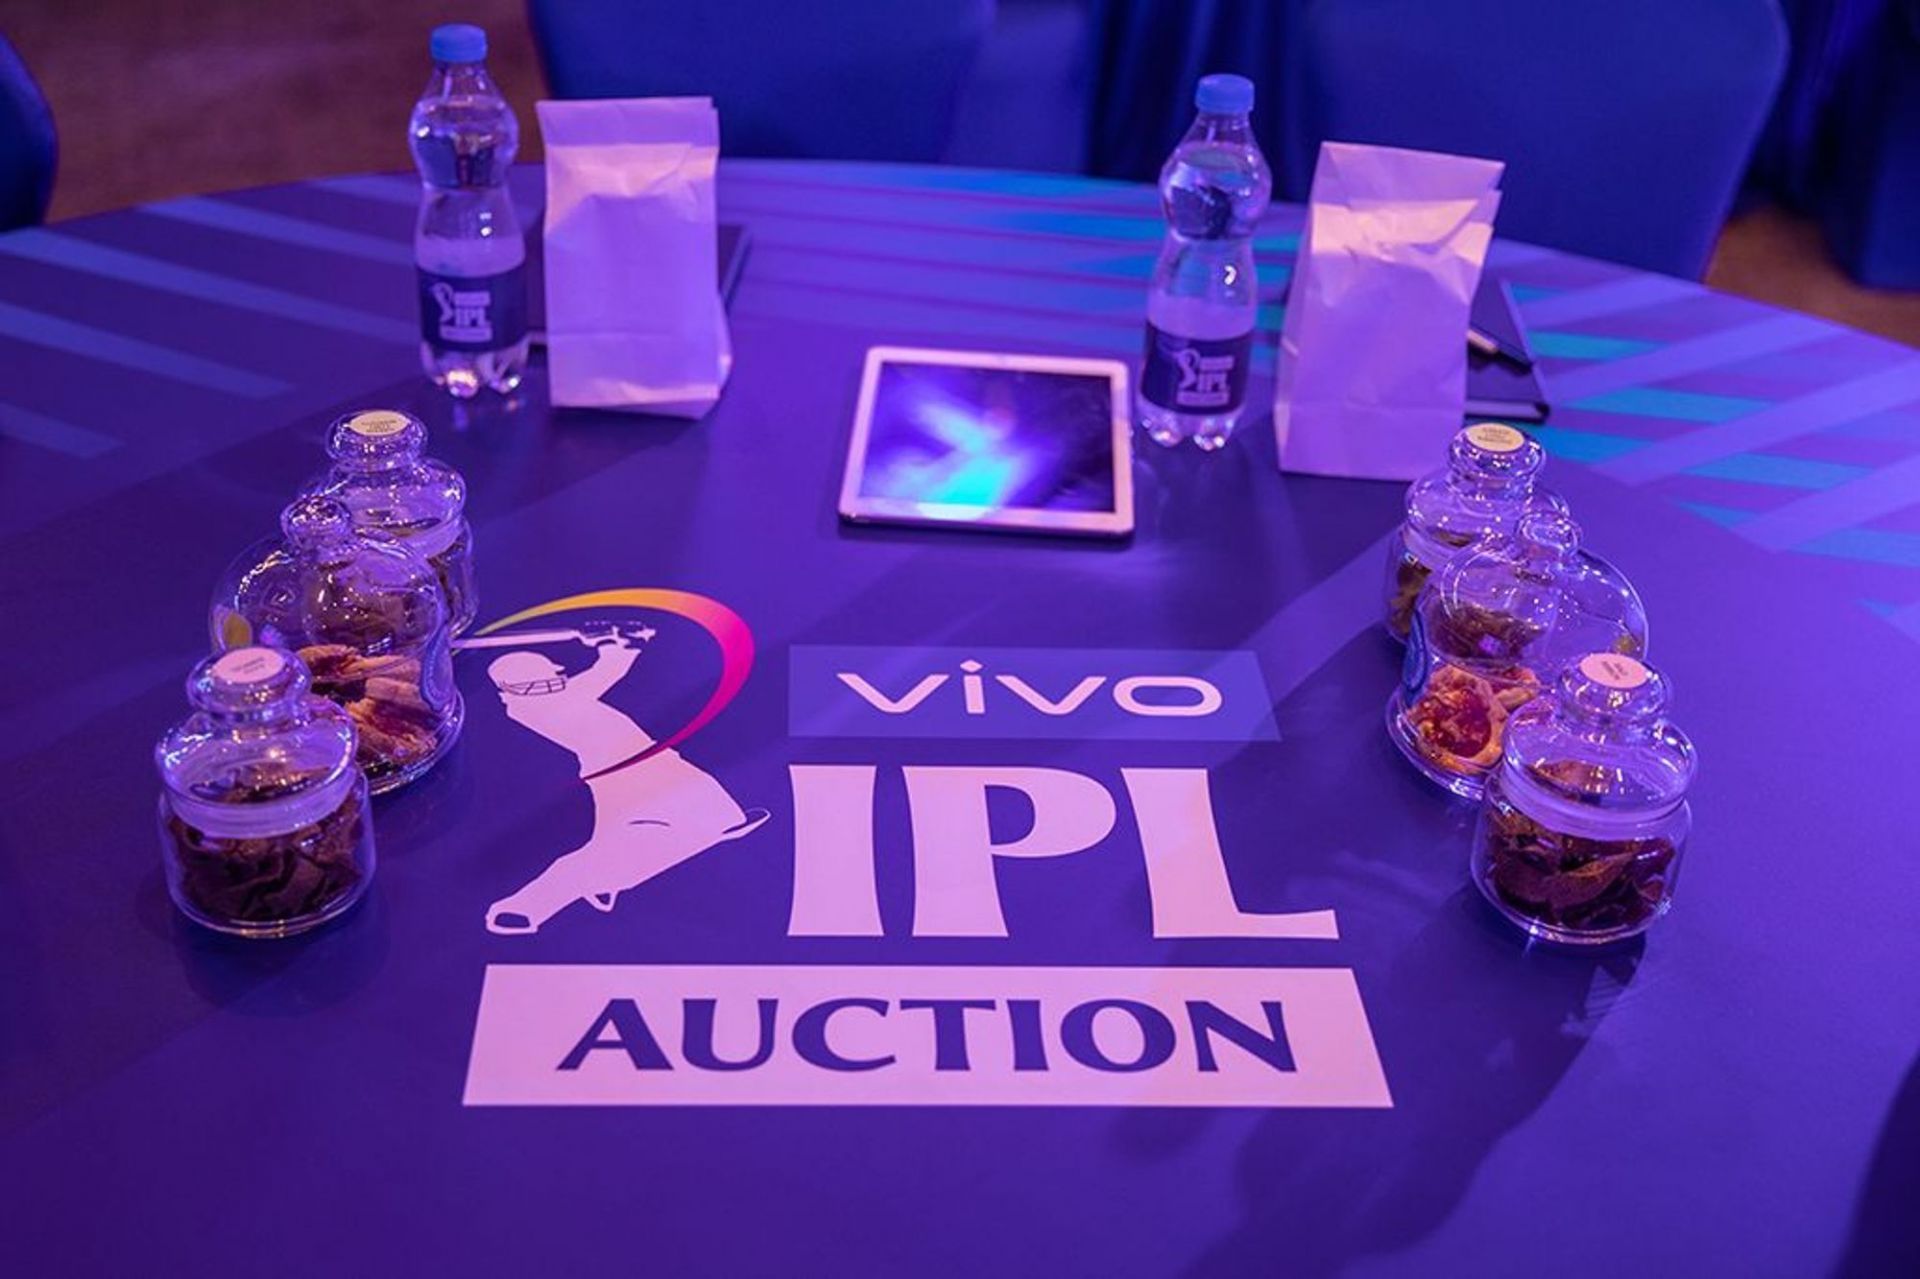 A mega auction is set to happen before IPL 2022 (Image Courtesy: IPLT20.com)